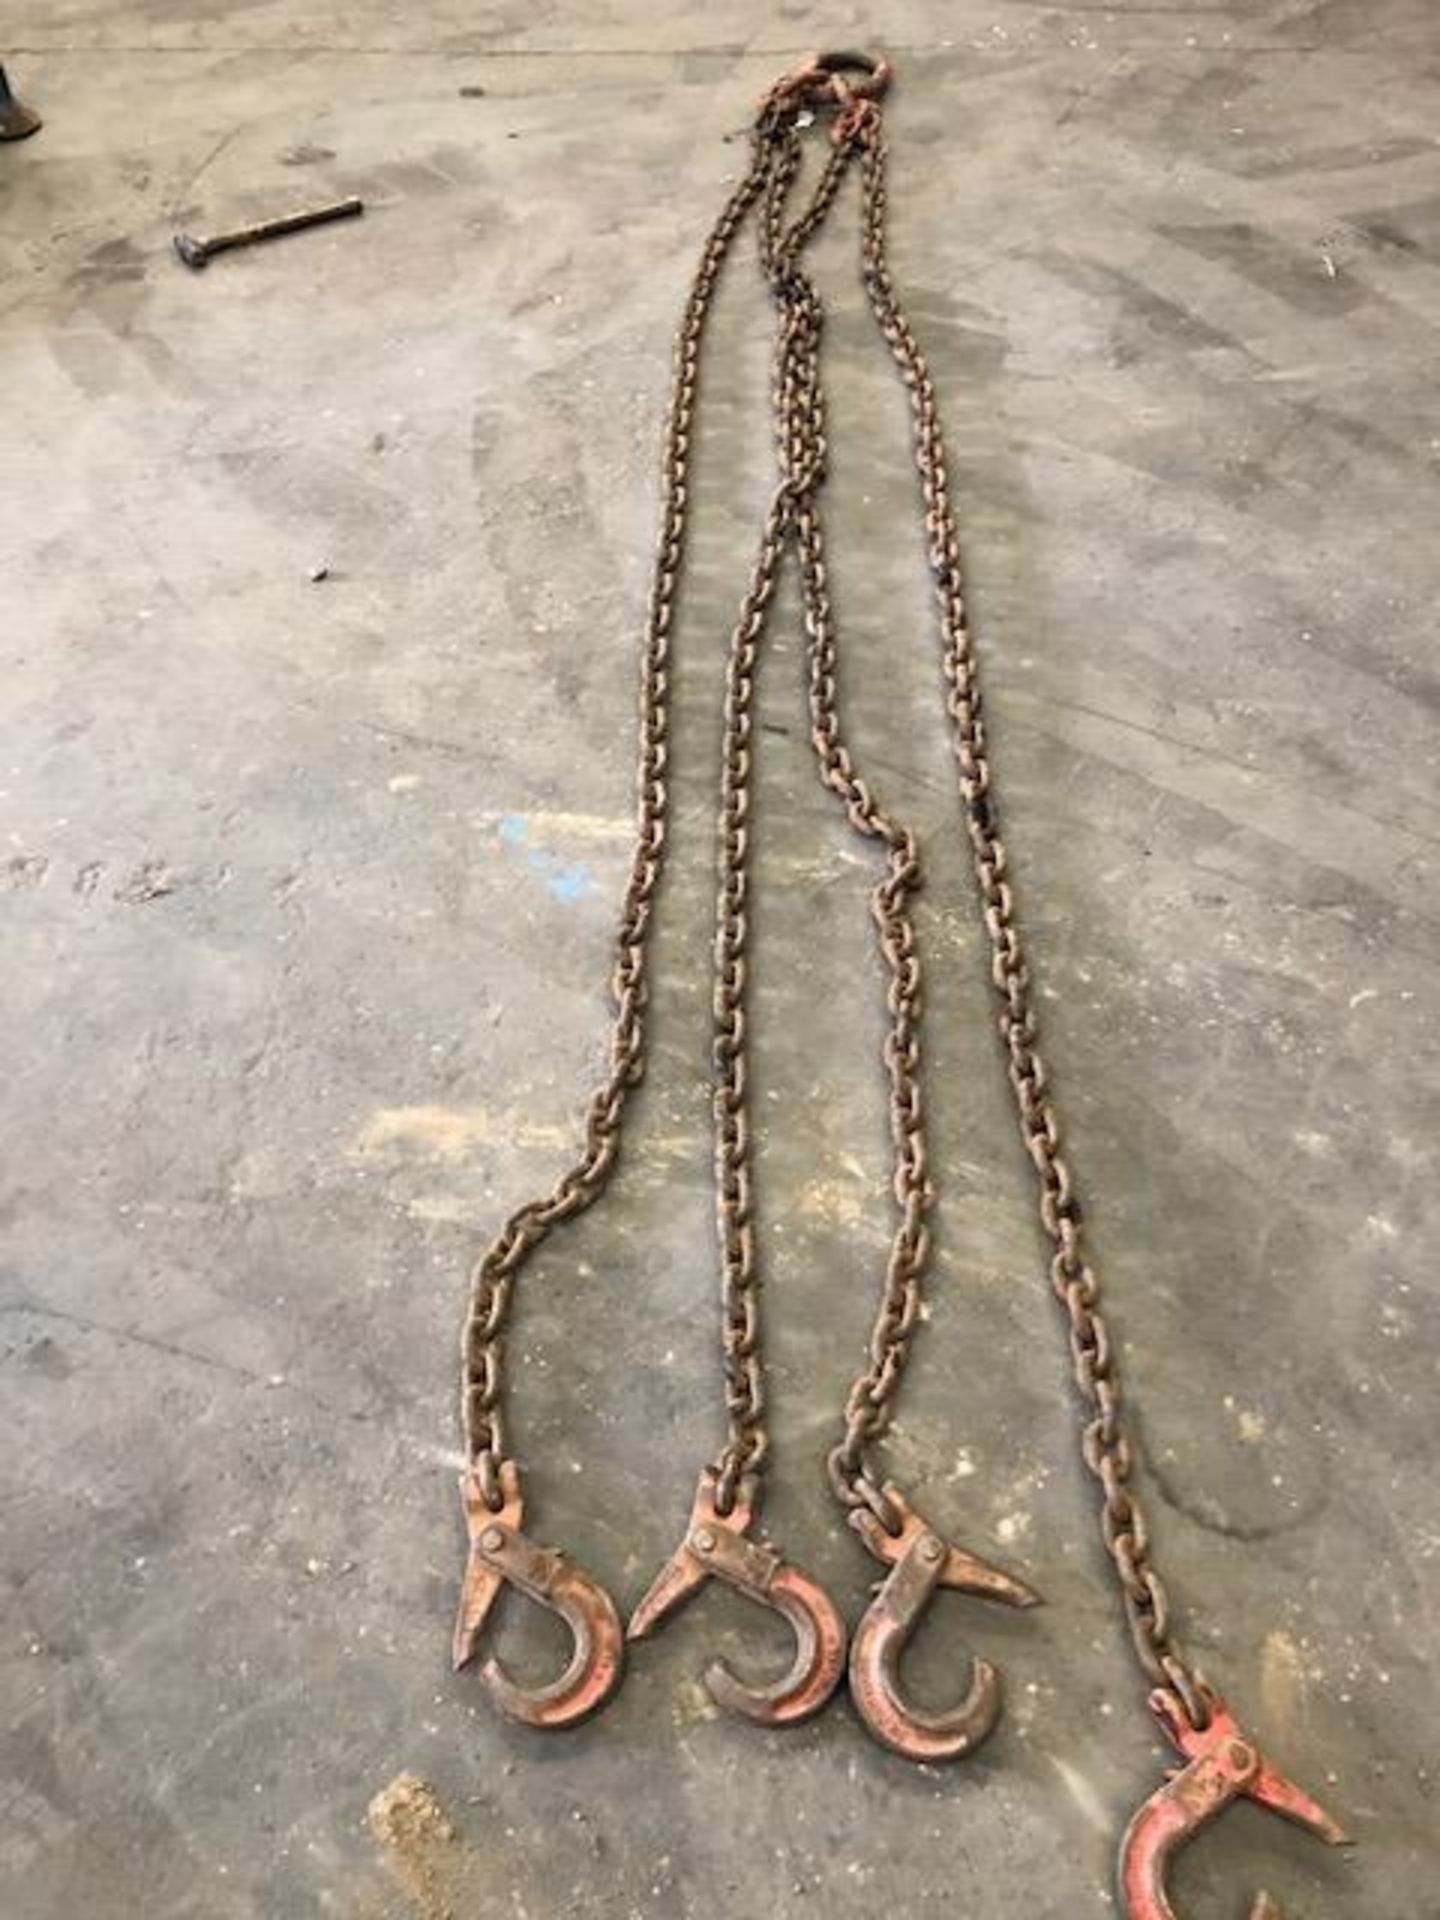 6 Ton Lifting Chains 4 Le